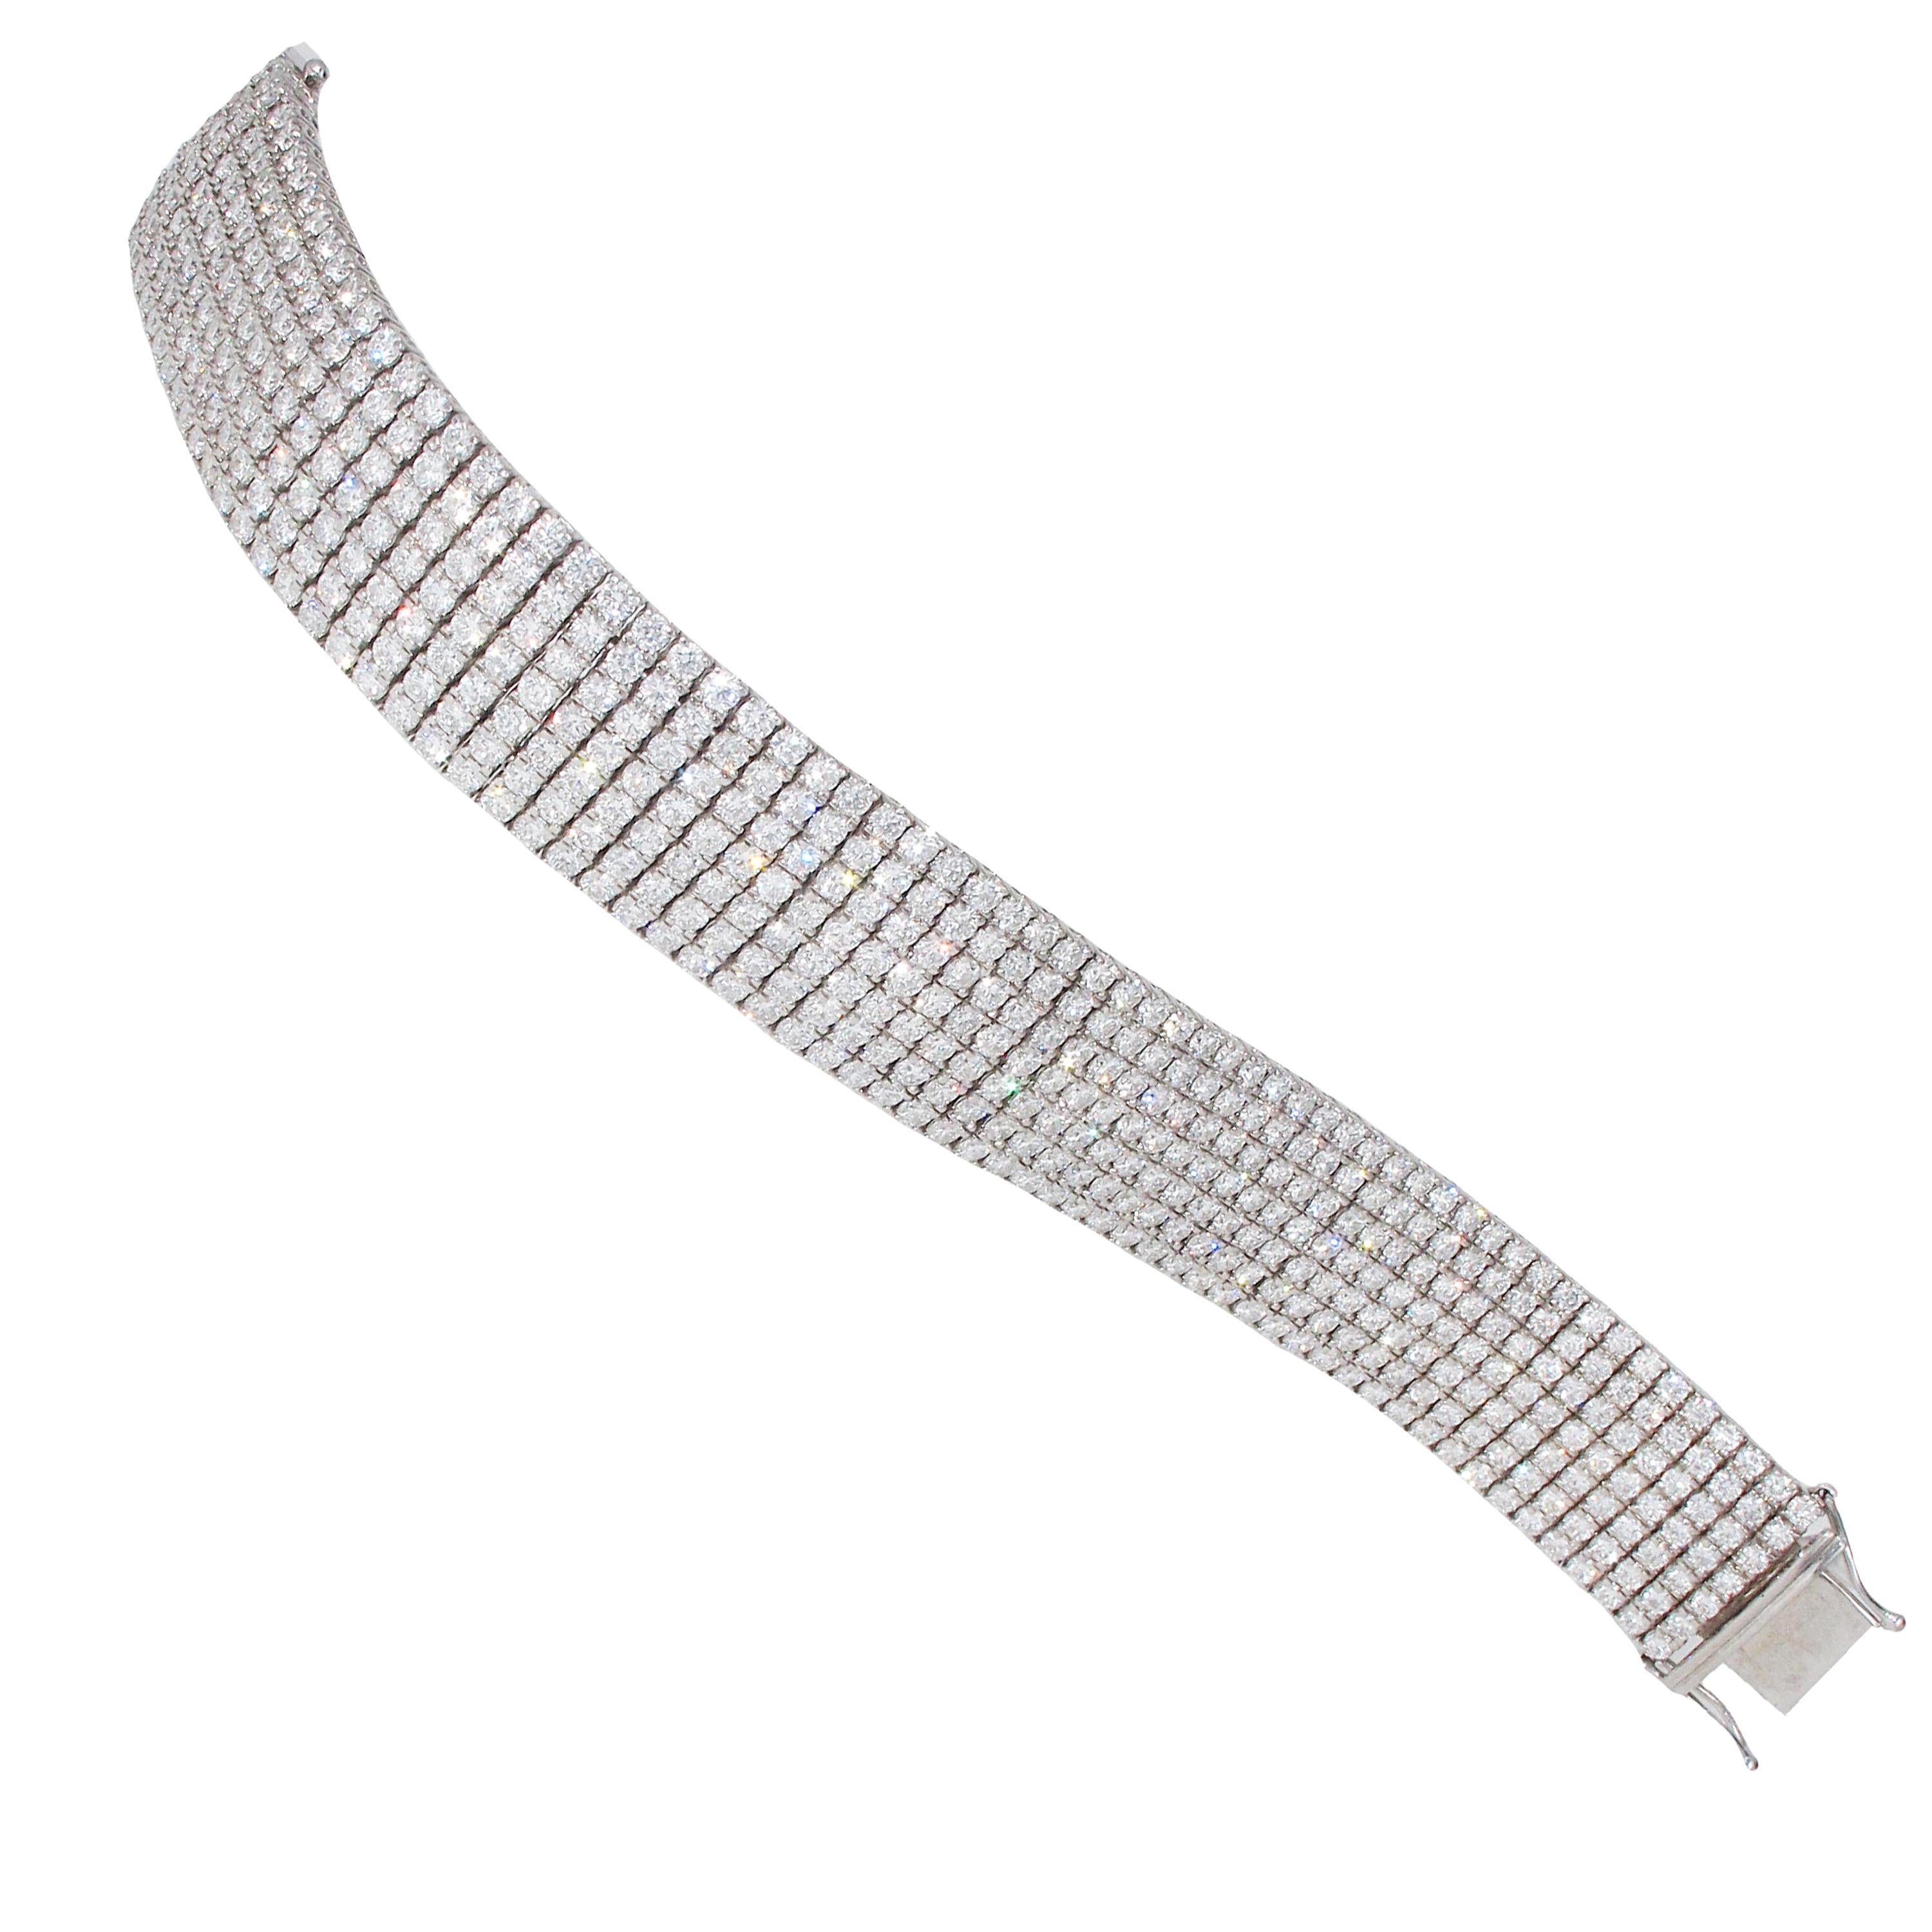 Over 23 Carat Diamond Bracelet. 18 Karat White Gold